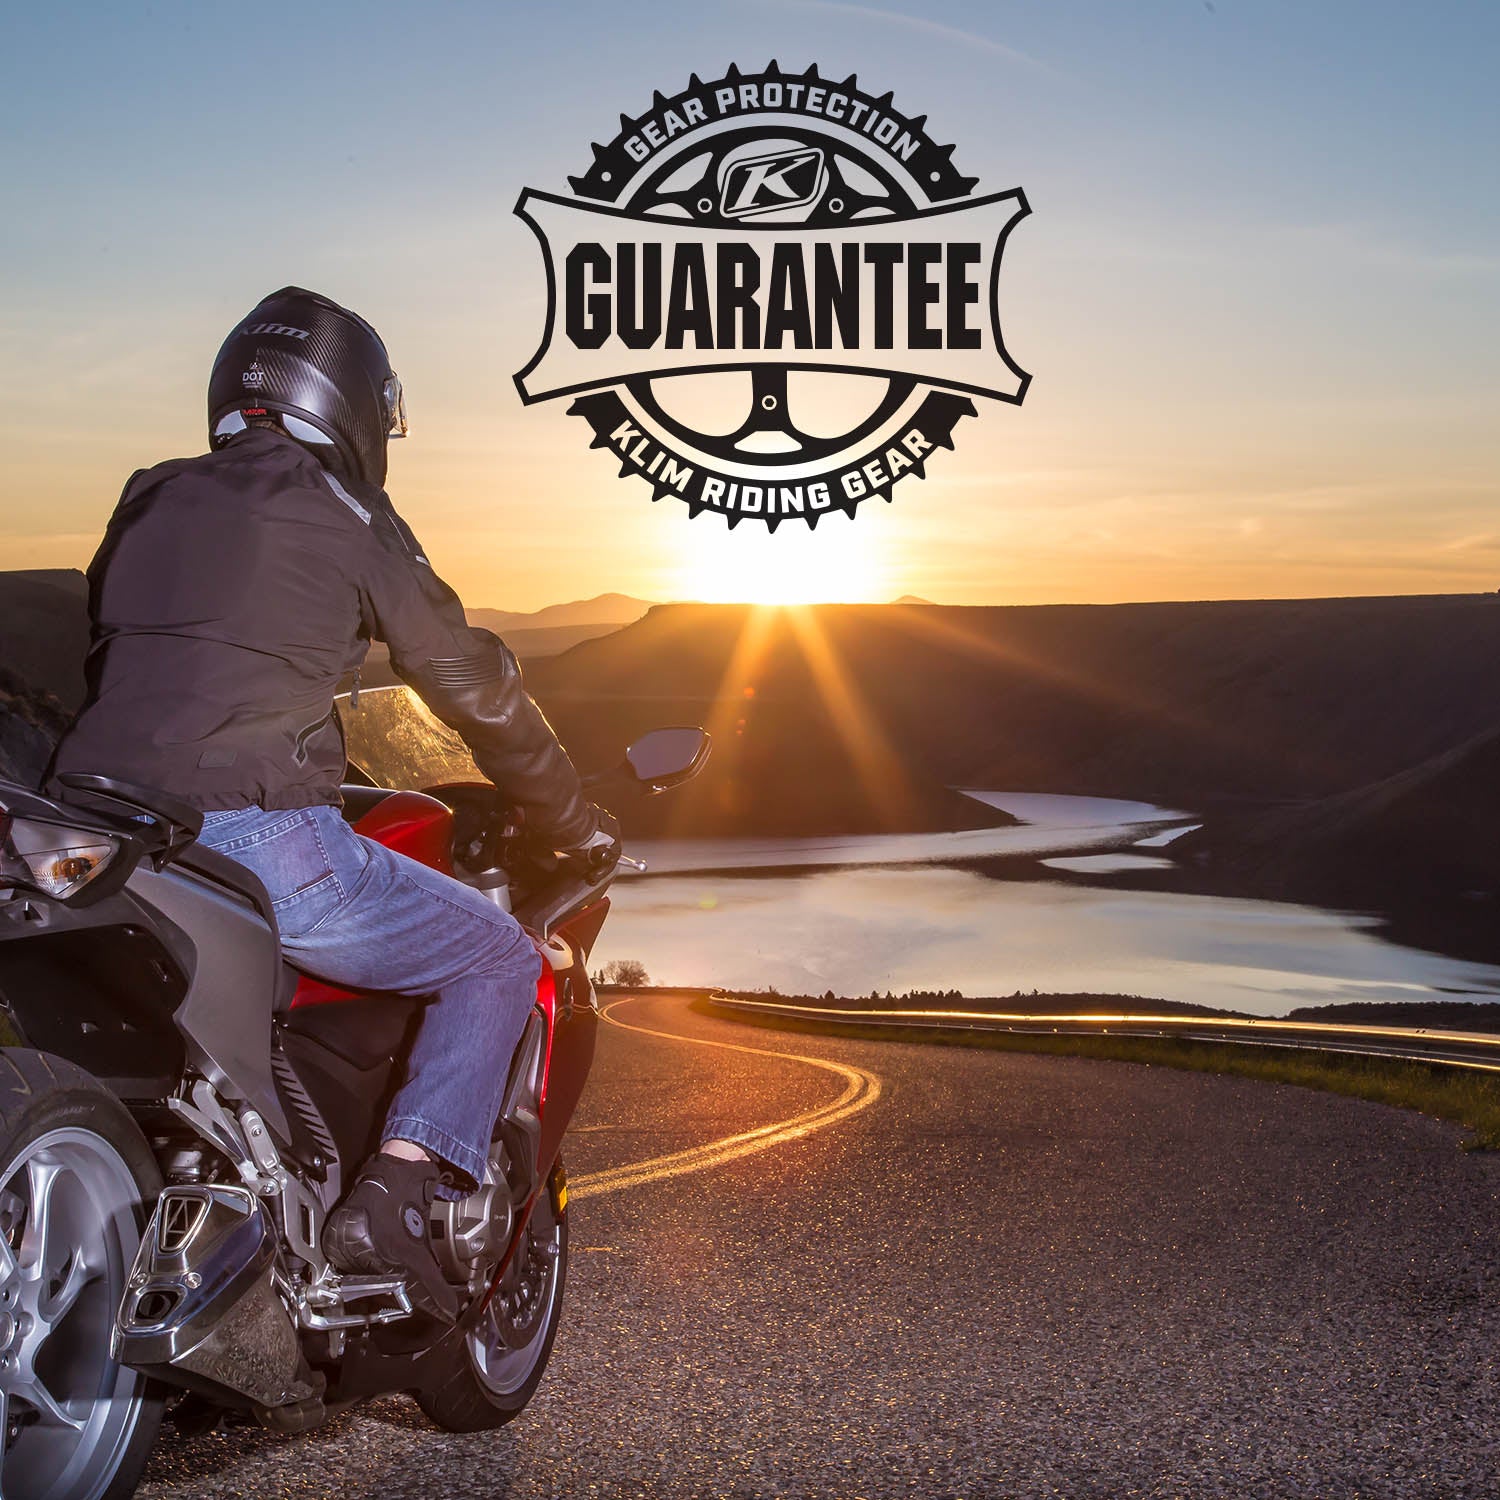 KLIM Motorcycle Gear Protection Guarantee 5 year protection Haustrom.com